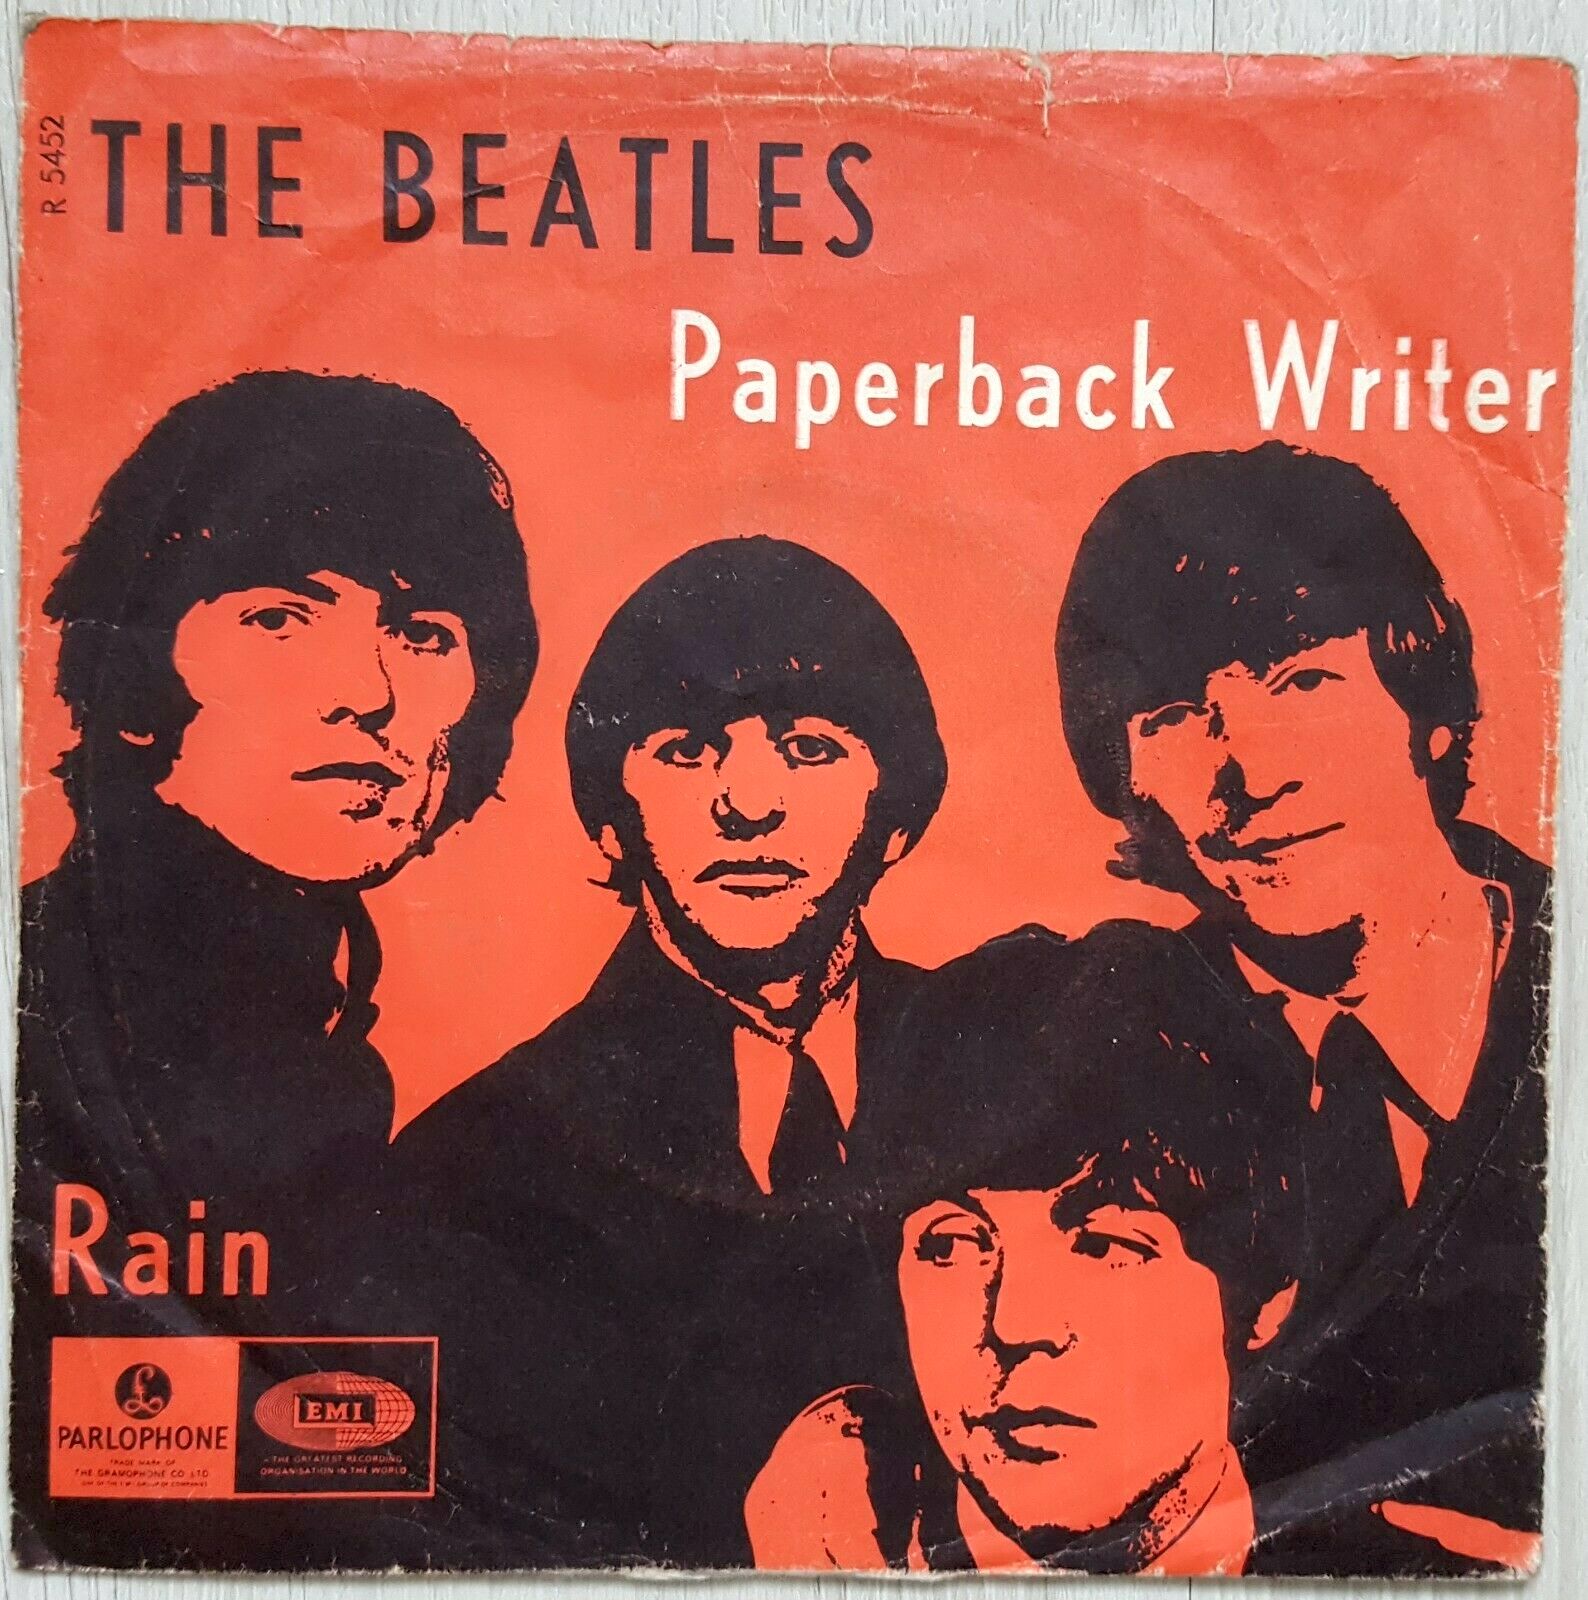 Cover beatles. Битлз 1966. The Beatles - Paperback writer (1966). The Beatles album обложка. Beatles Rain обложка.